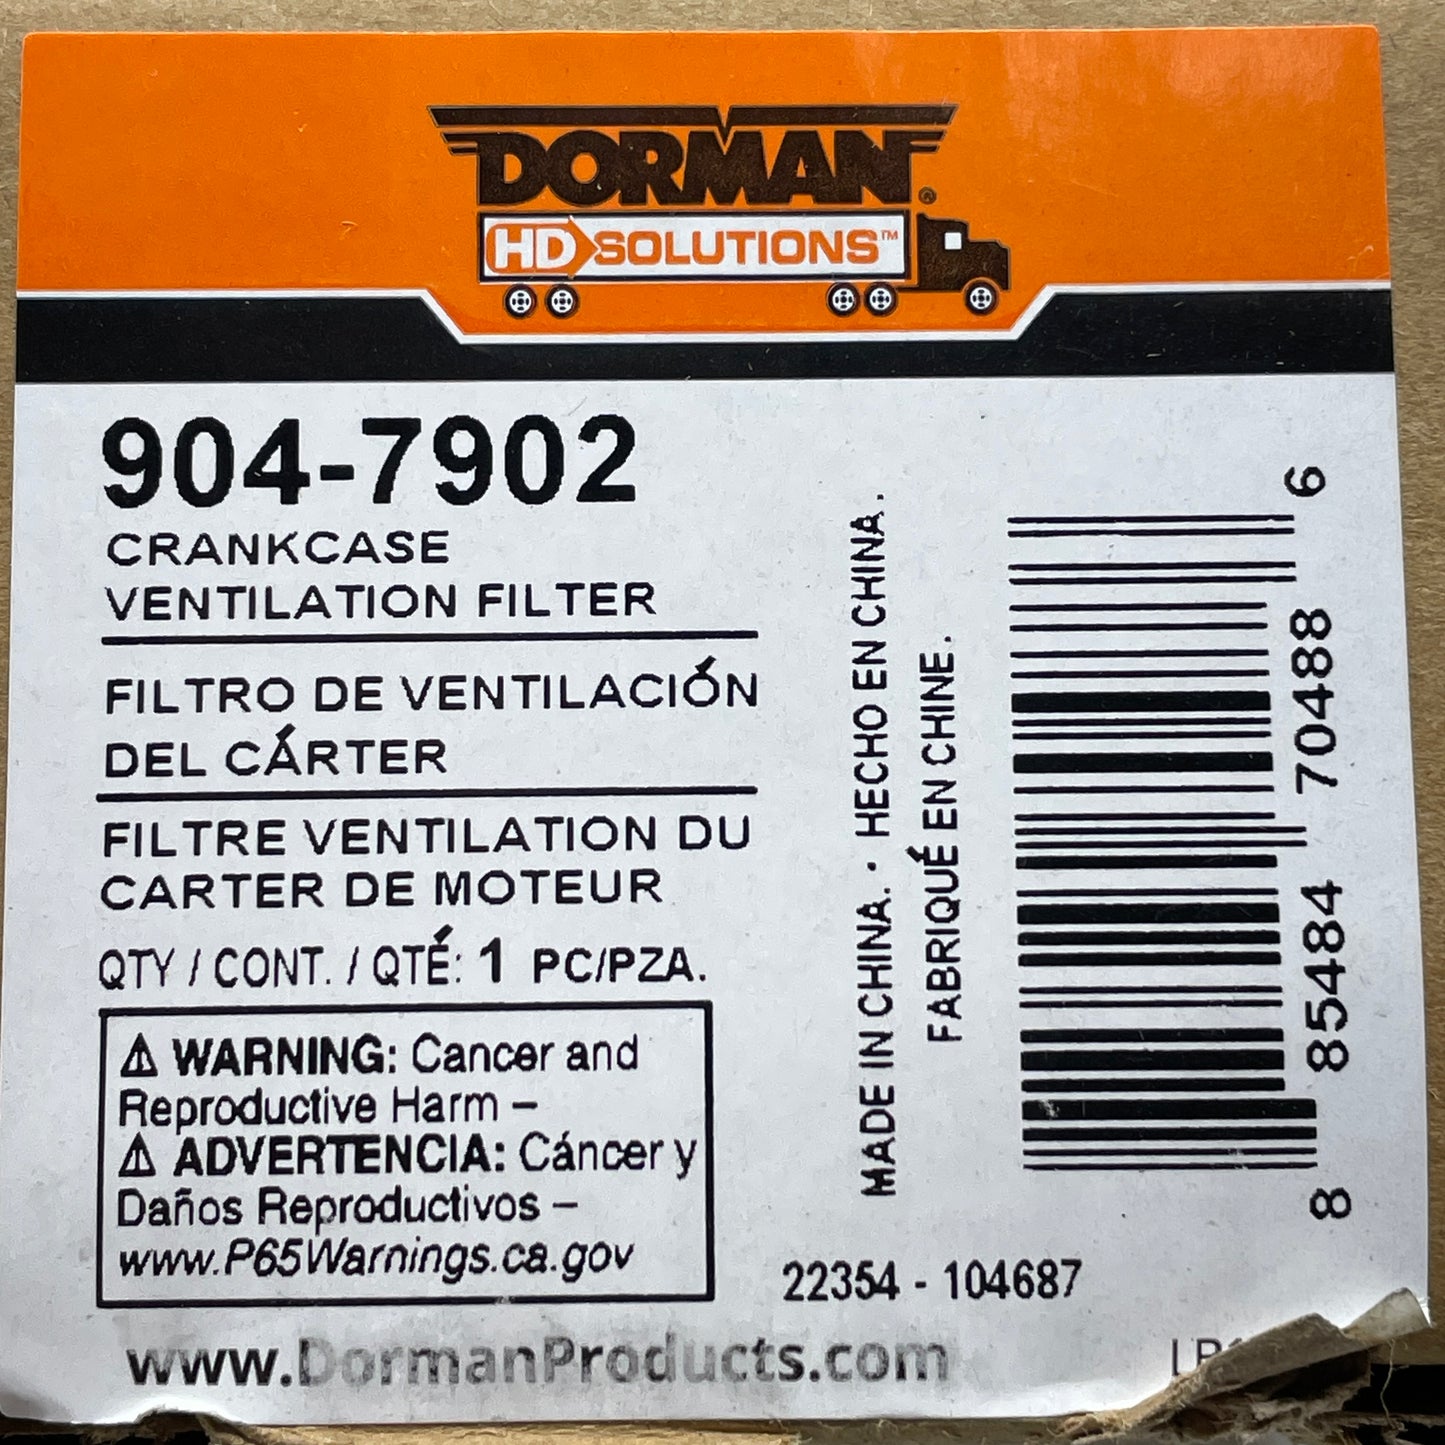 DORMAN Crankcase Ventilation Filter 904-7902